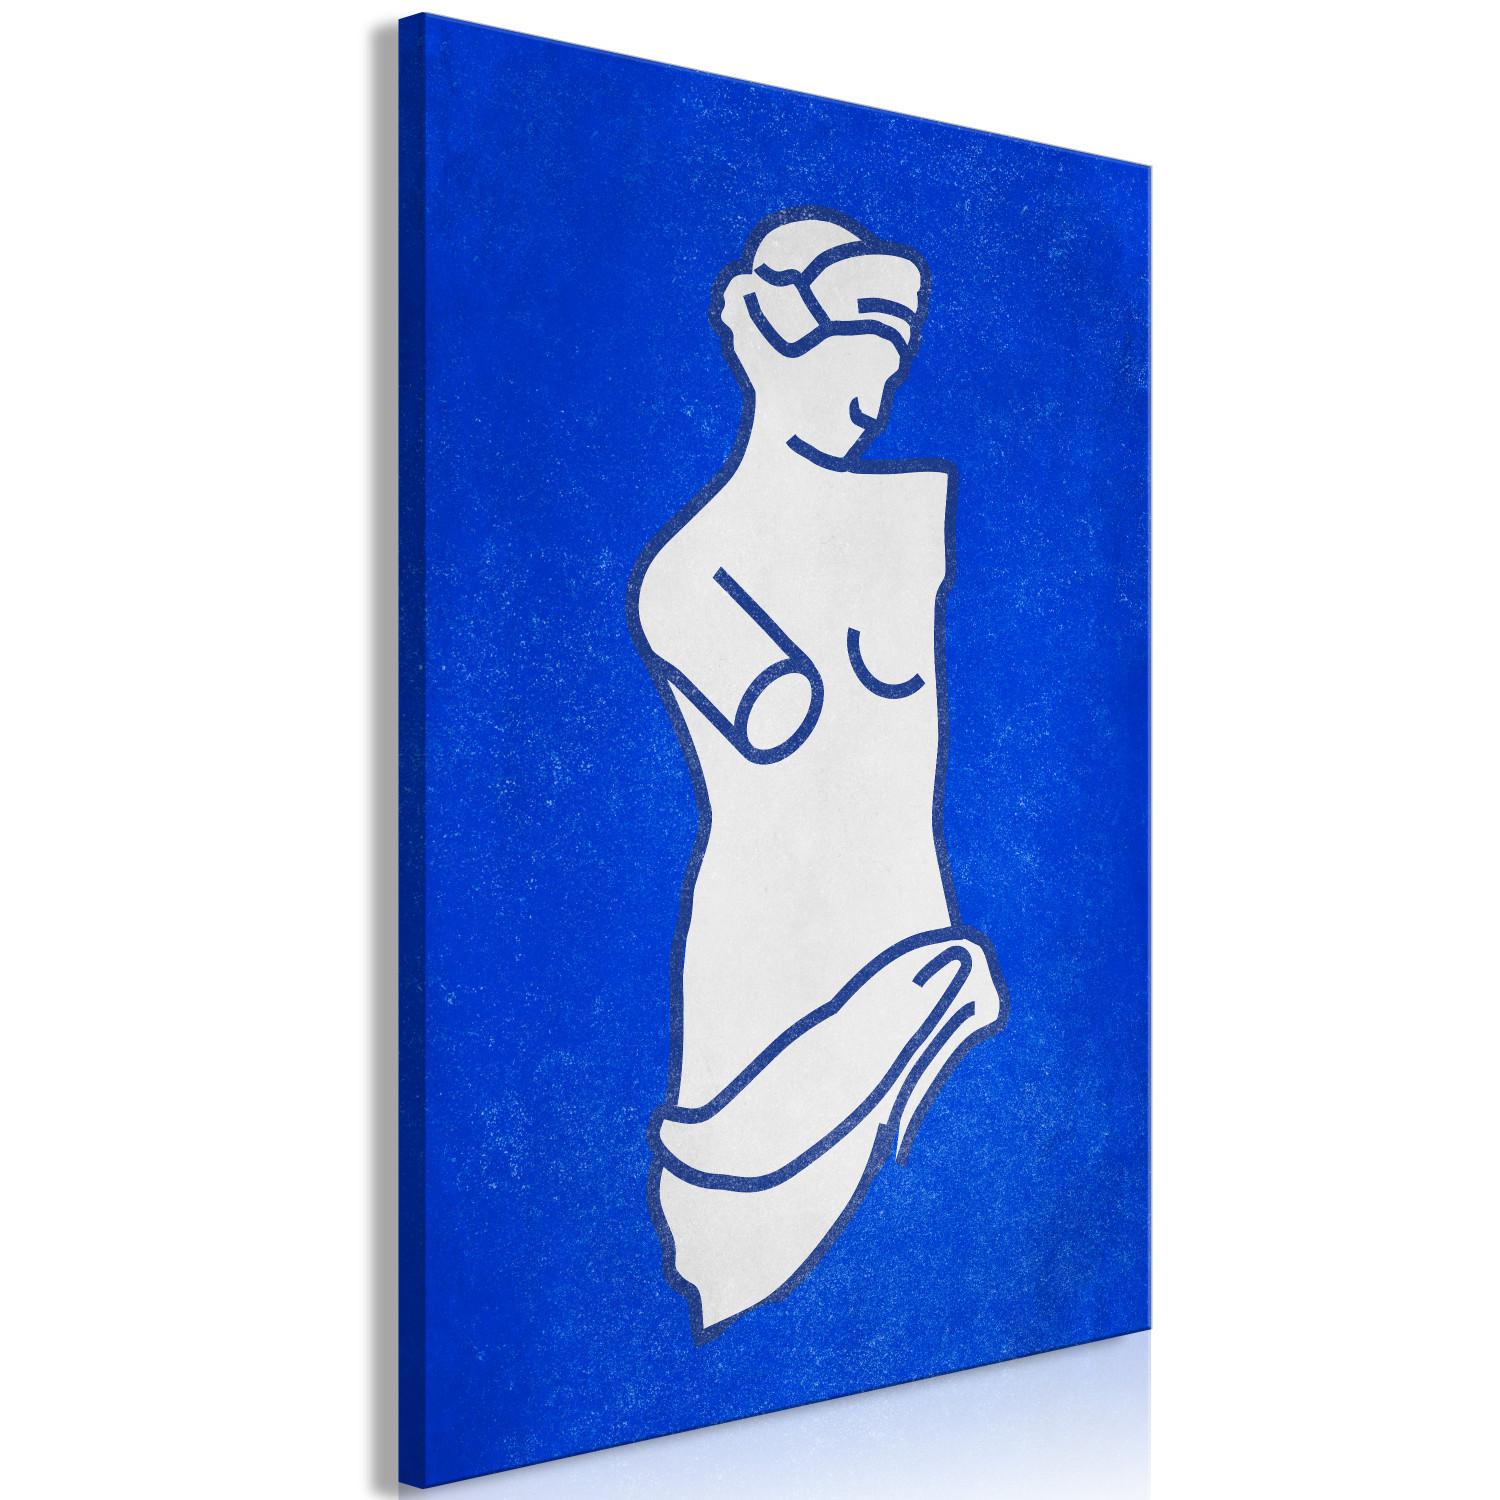 Canvas Figure of Venus - graphic modeled on Venus sculpture on blue offset